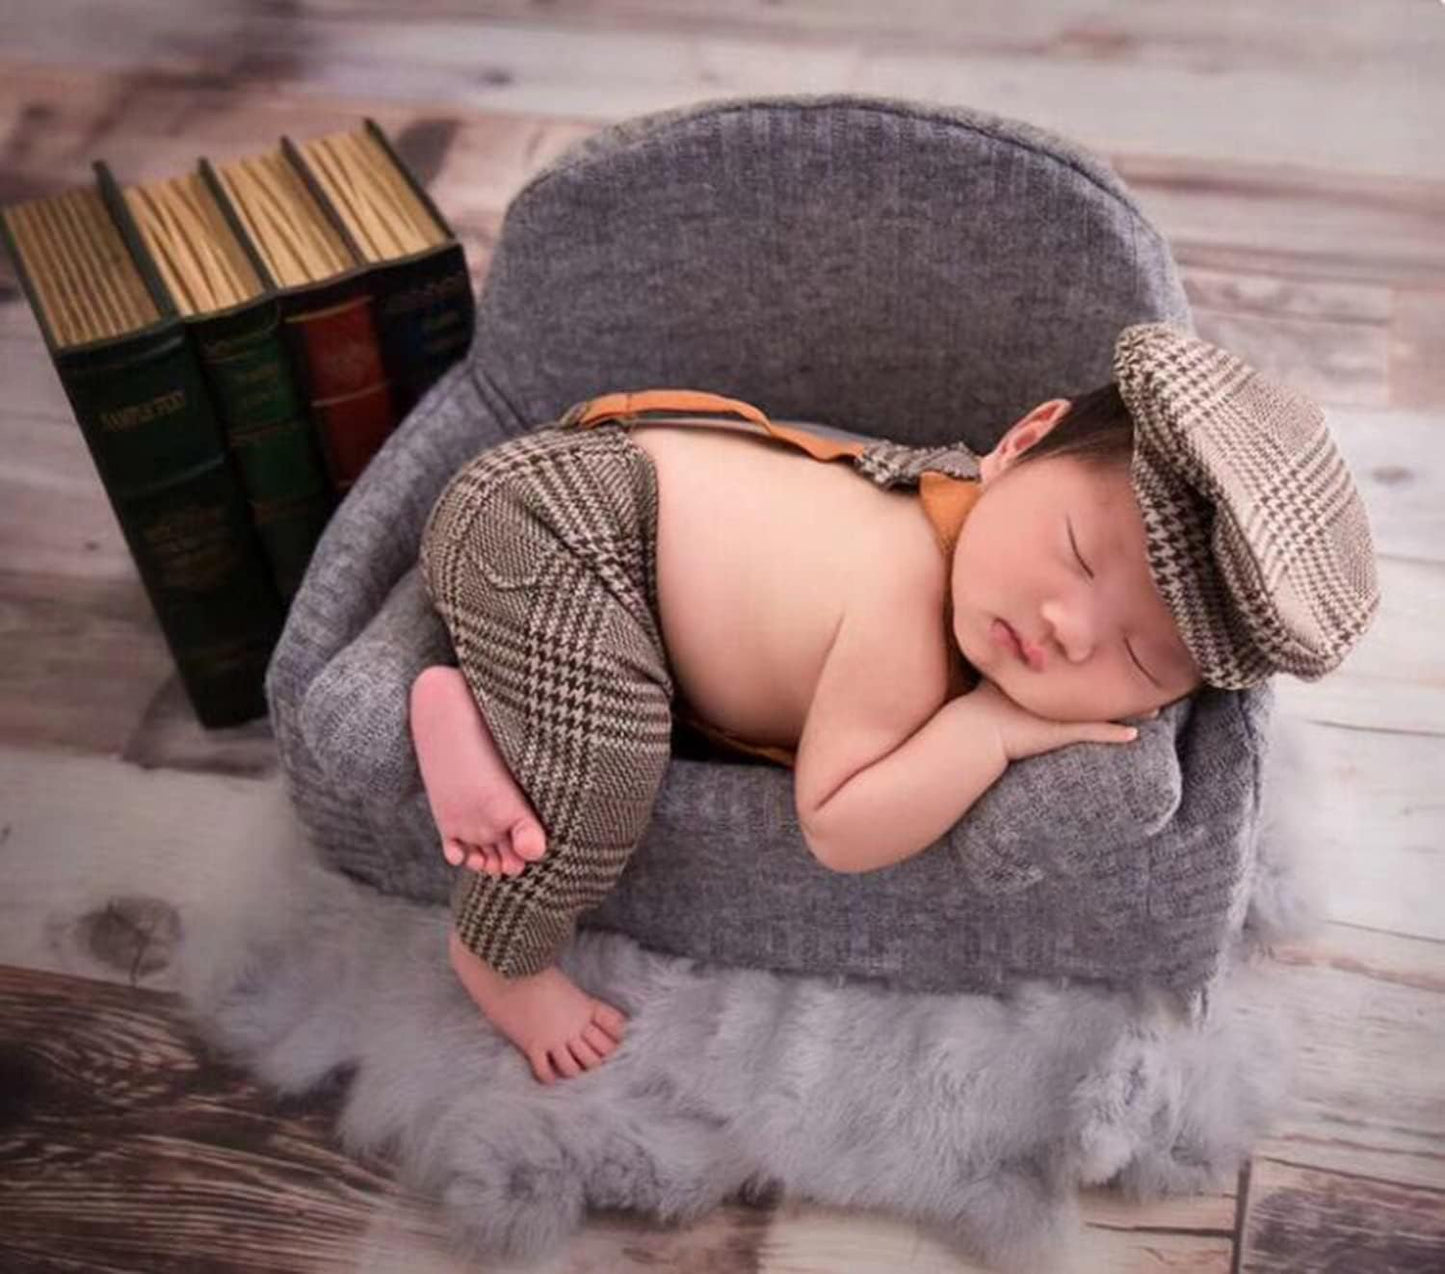 Ederafoto Newborn Photography Outfits Props Baby Photoshoots Costume Boy Photo Posing Lattice Suspender Pants Hats